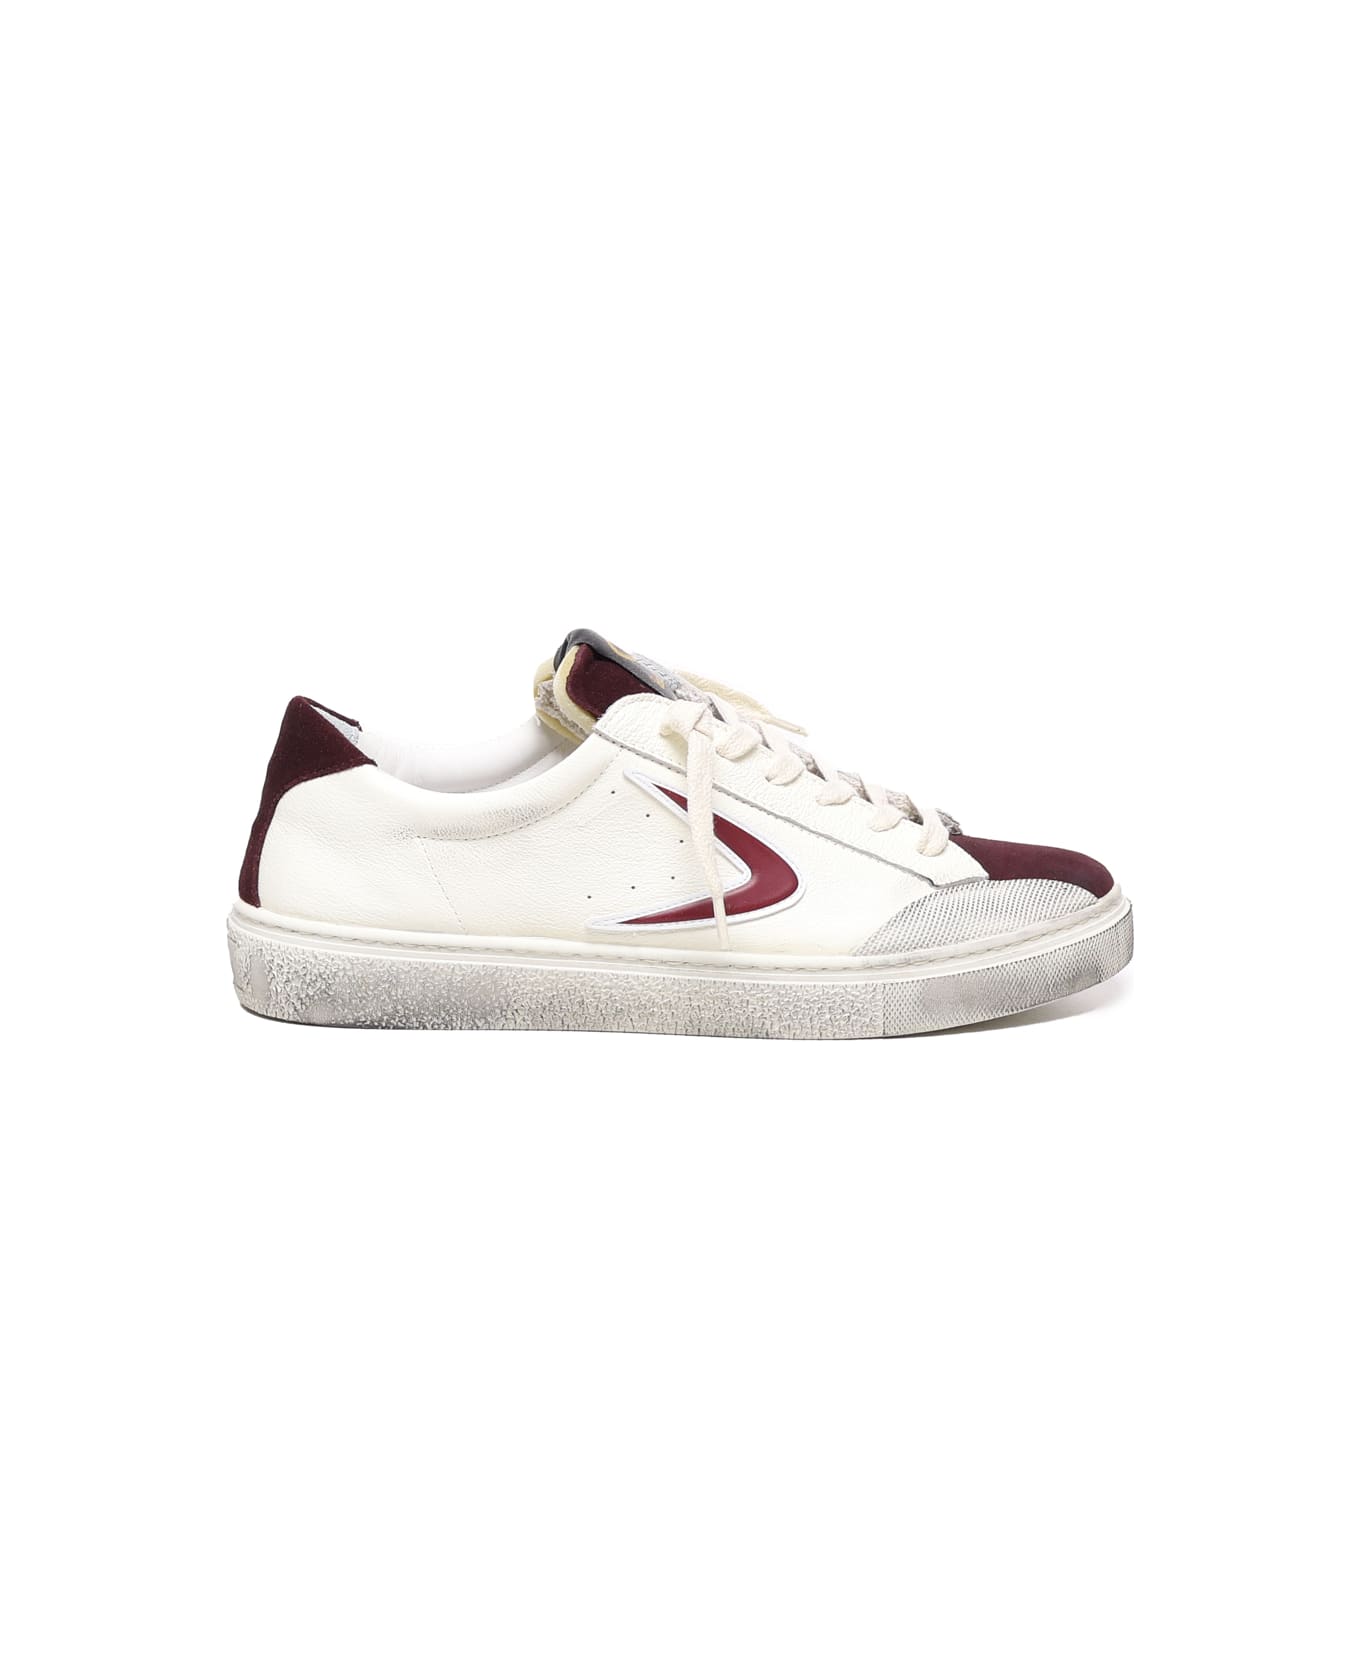 Valsport Ollie Goofy Sneakers - White, bordeaux